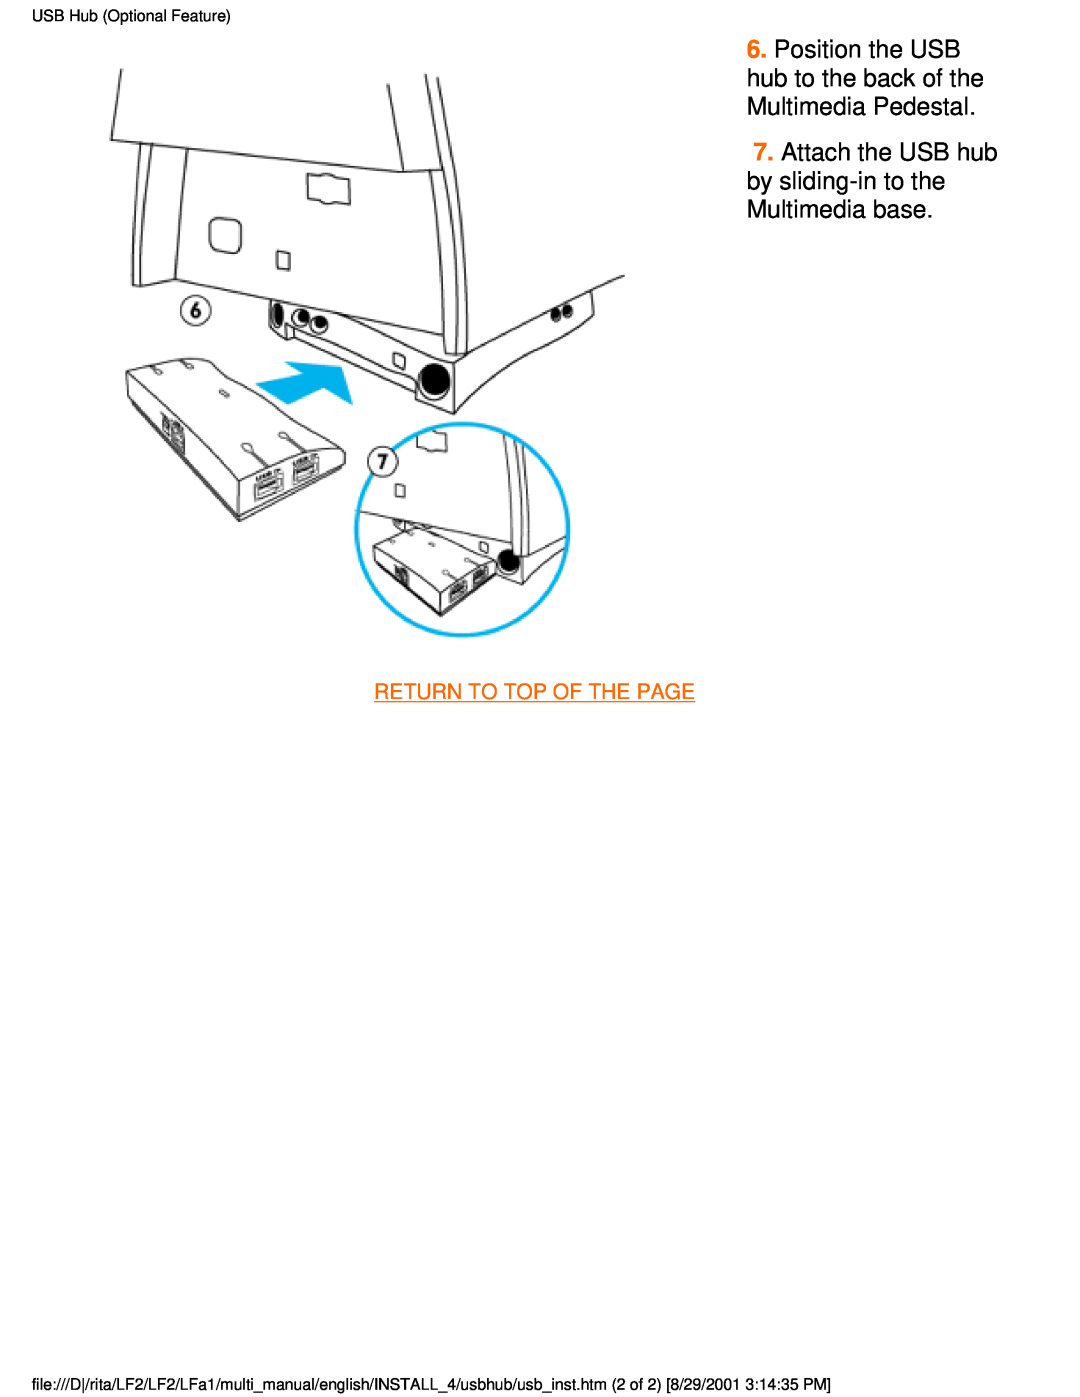 Philips 201P user manual USB Hub Optional Feature 